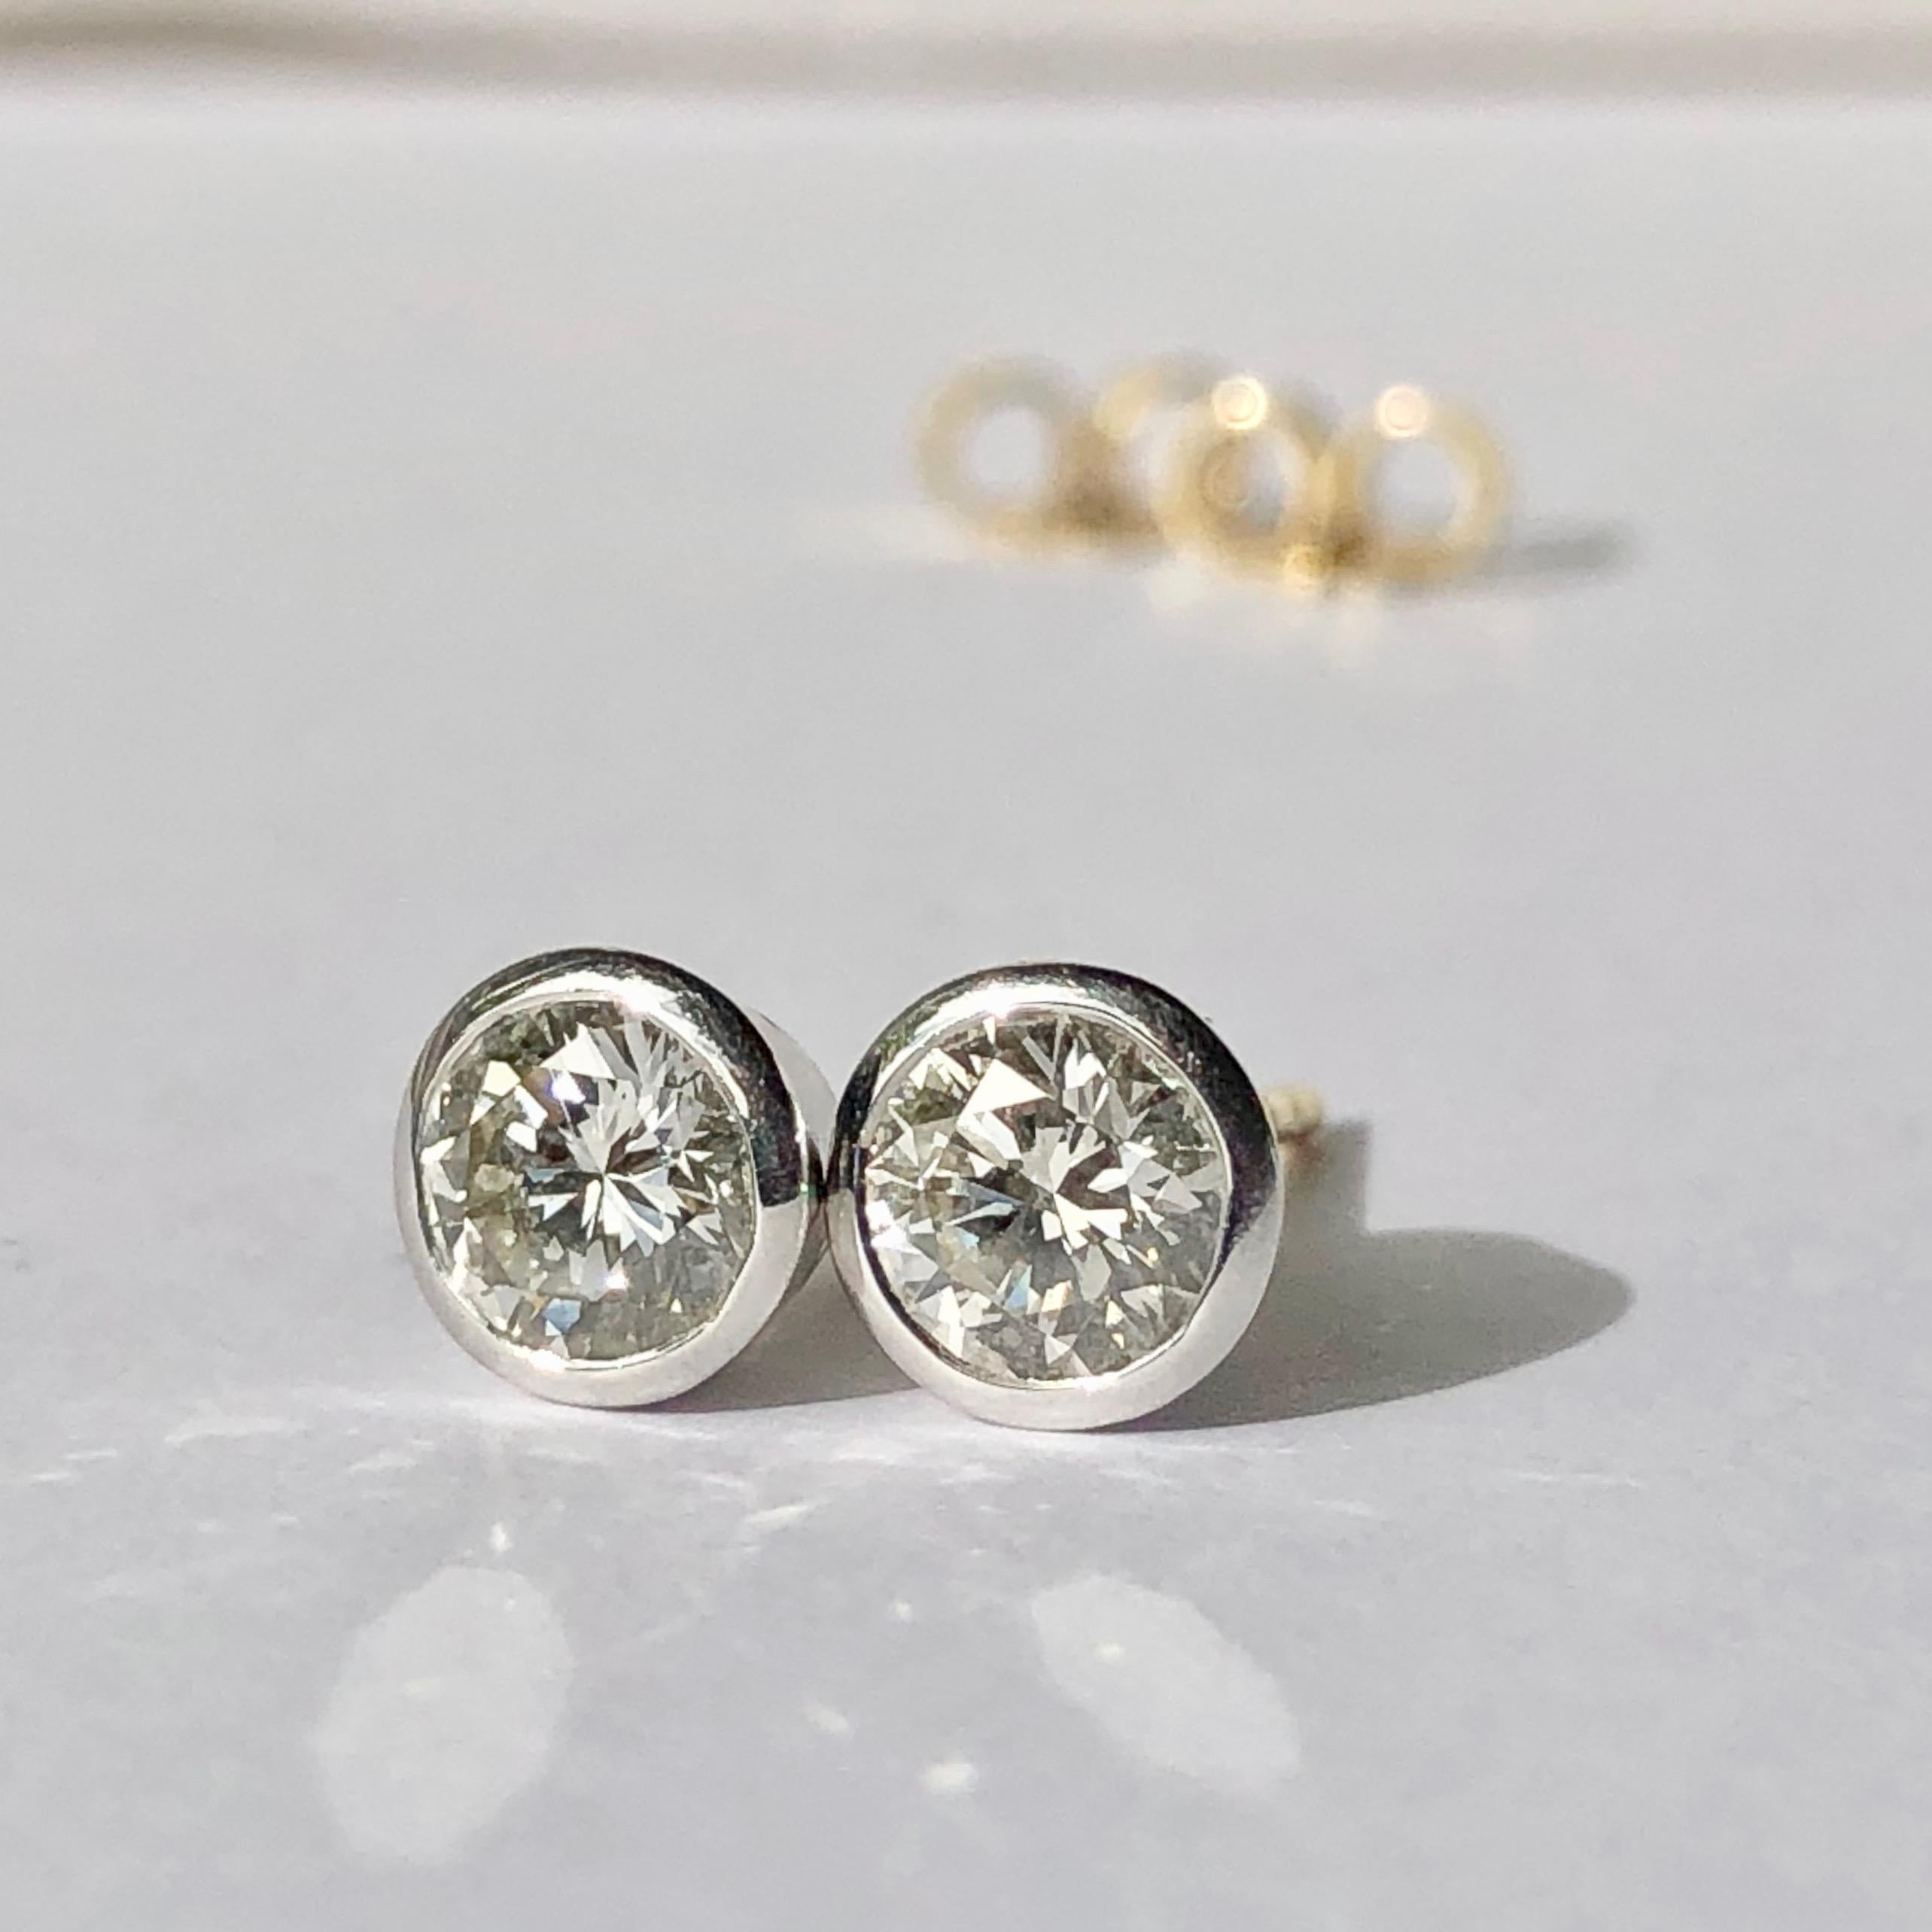 Contemporary White Diamond Earrings Studs Single Stone Round Brilliant Cut Solitaire 18k Gold